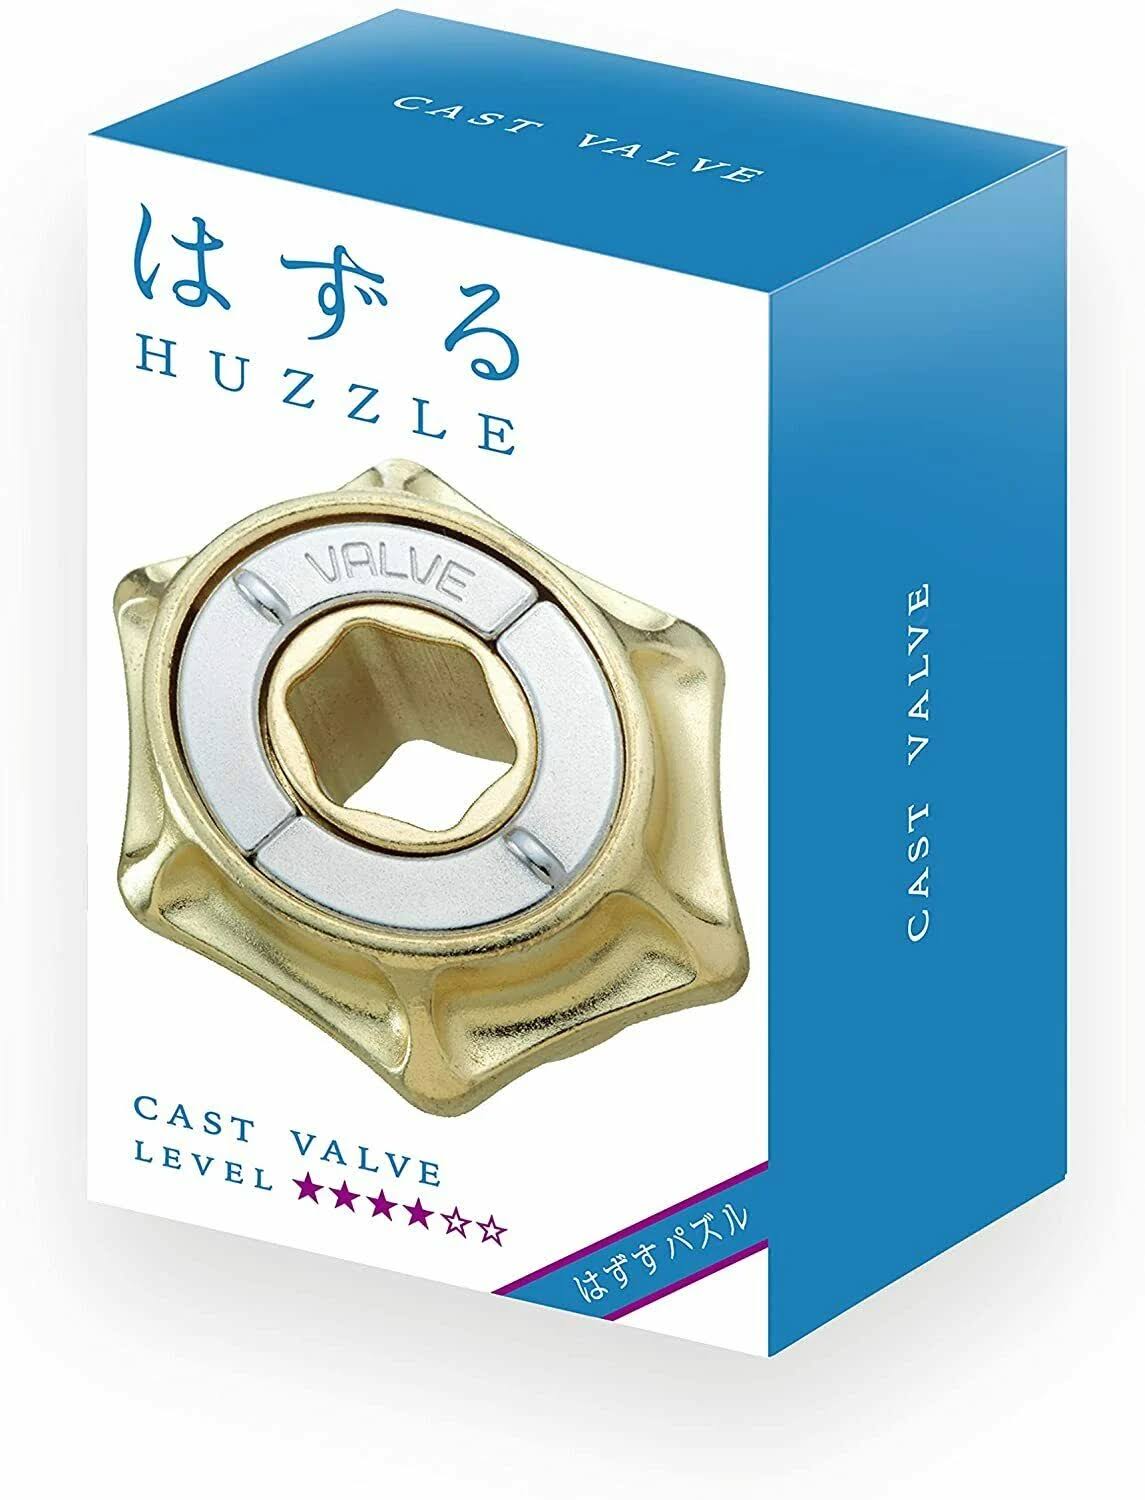 Hanayama Huzzle L4 Valve